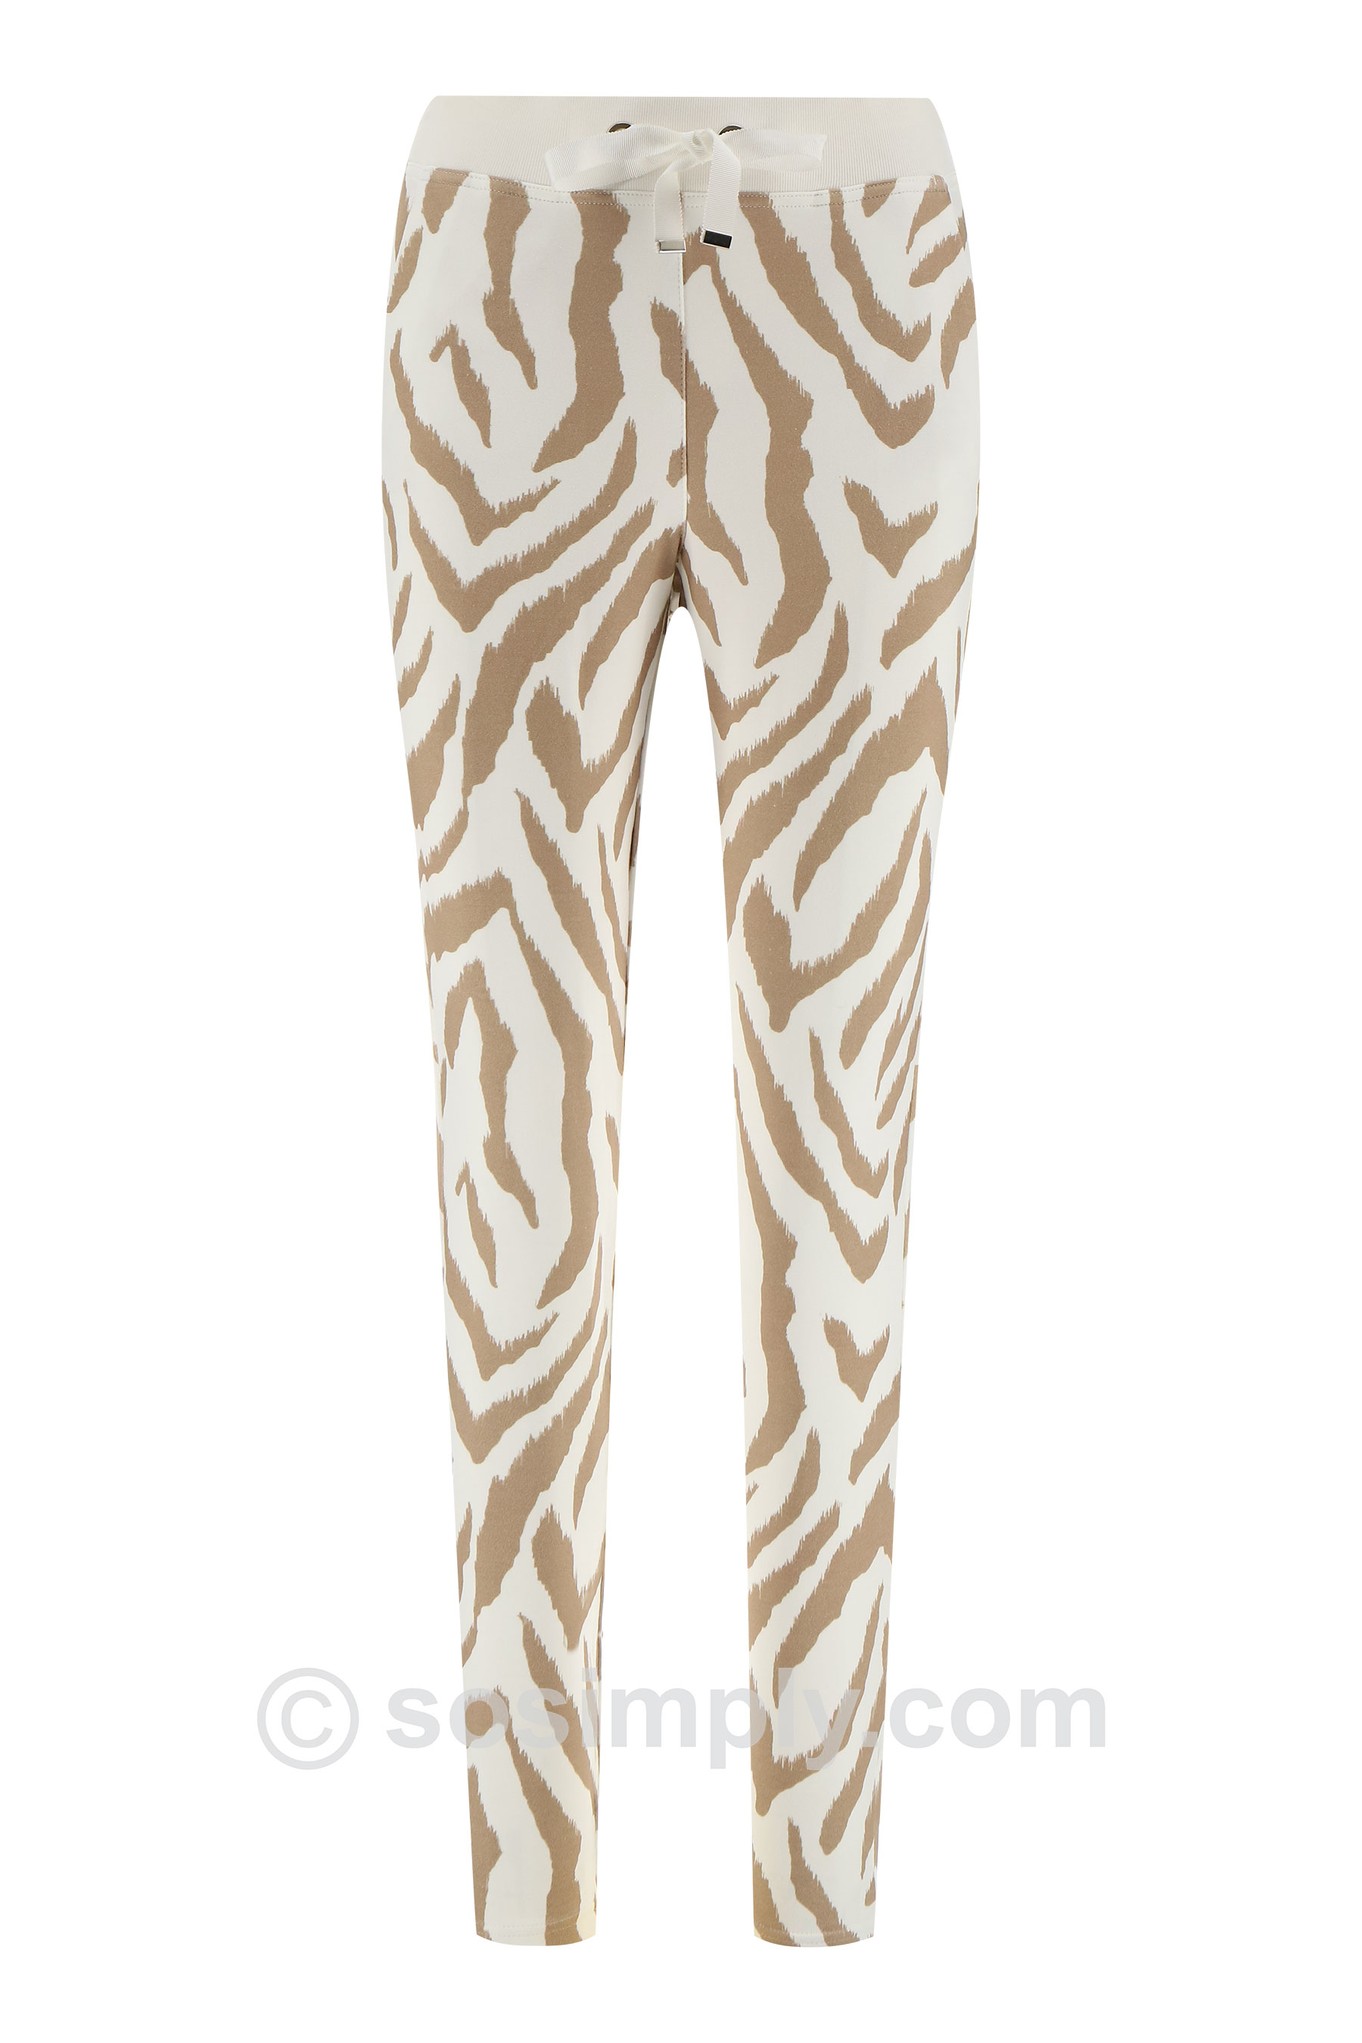 I'cona Luxe Zebra Jogger Pants 